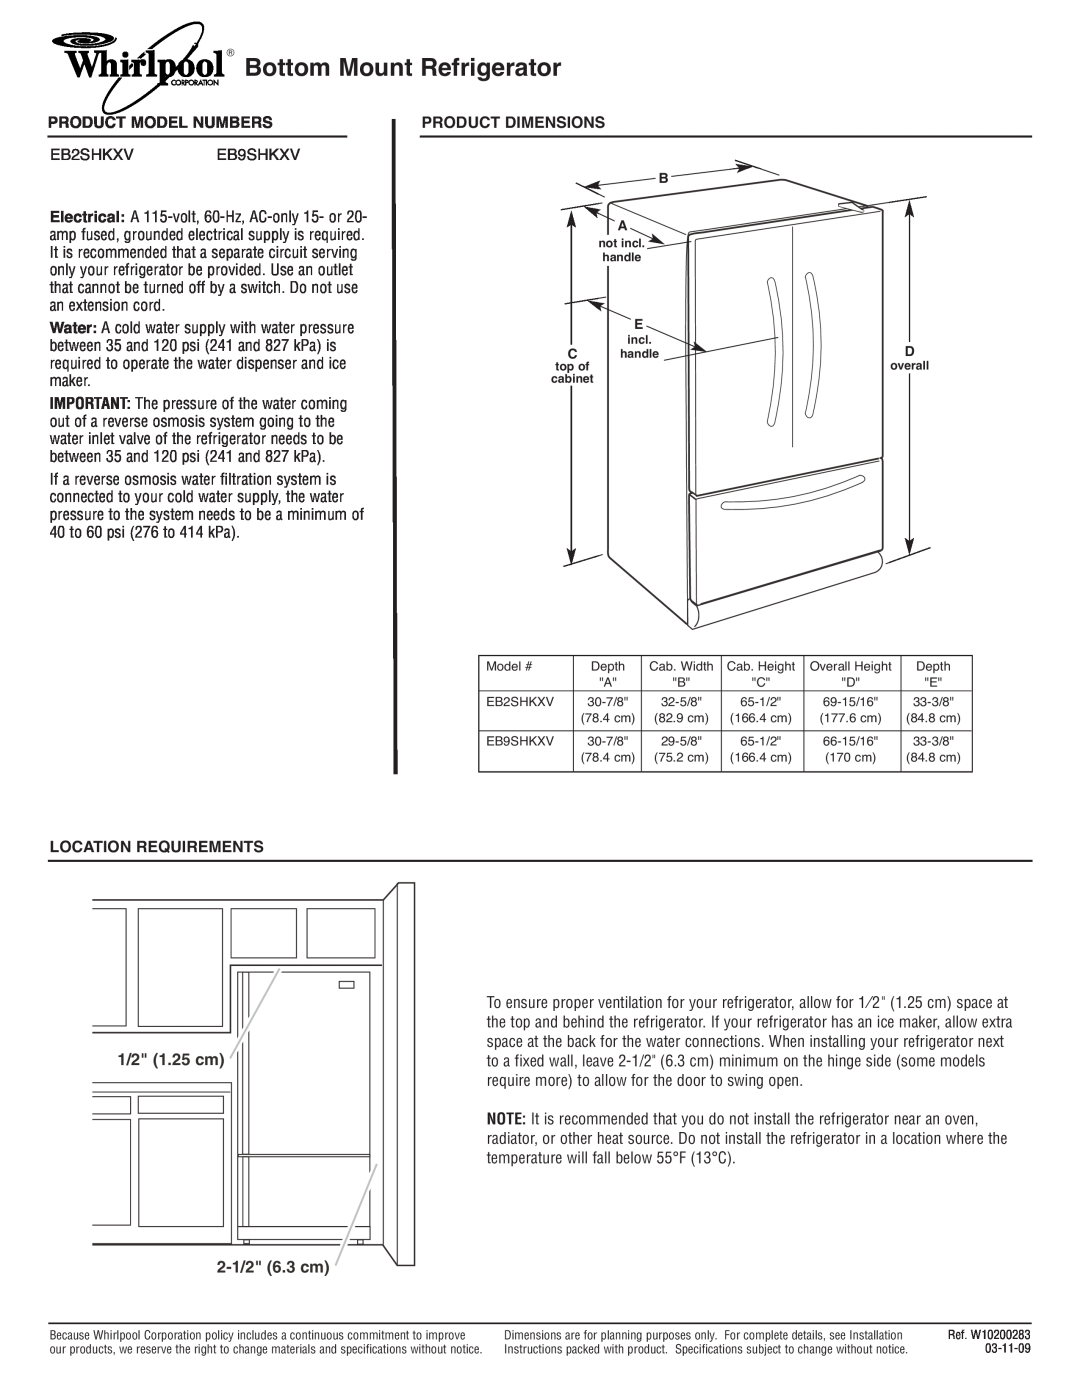 Whirlpool EB2SHKXV, EB9SHKXV dimensions Bottom Mount Refrigerator, 1/2 1.25 cm, 2-1/26.3 cm, Product Model Numbers 